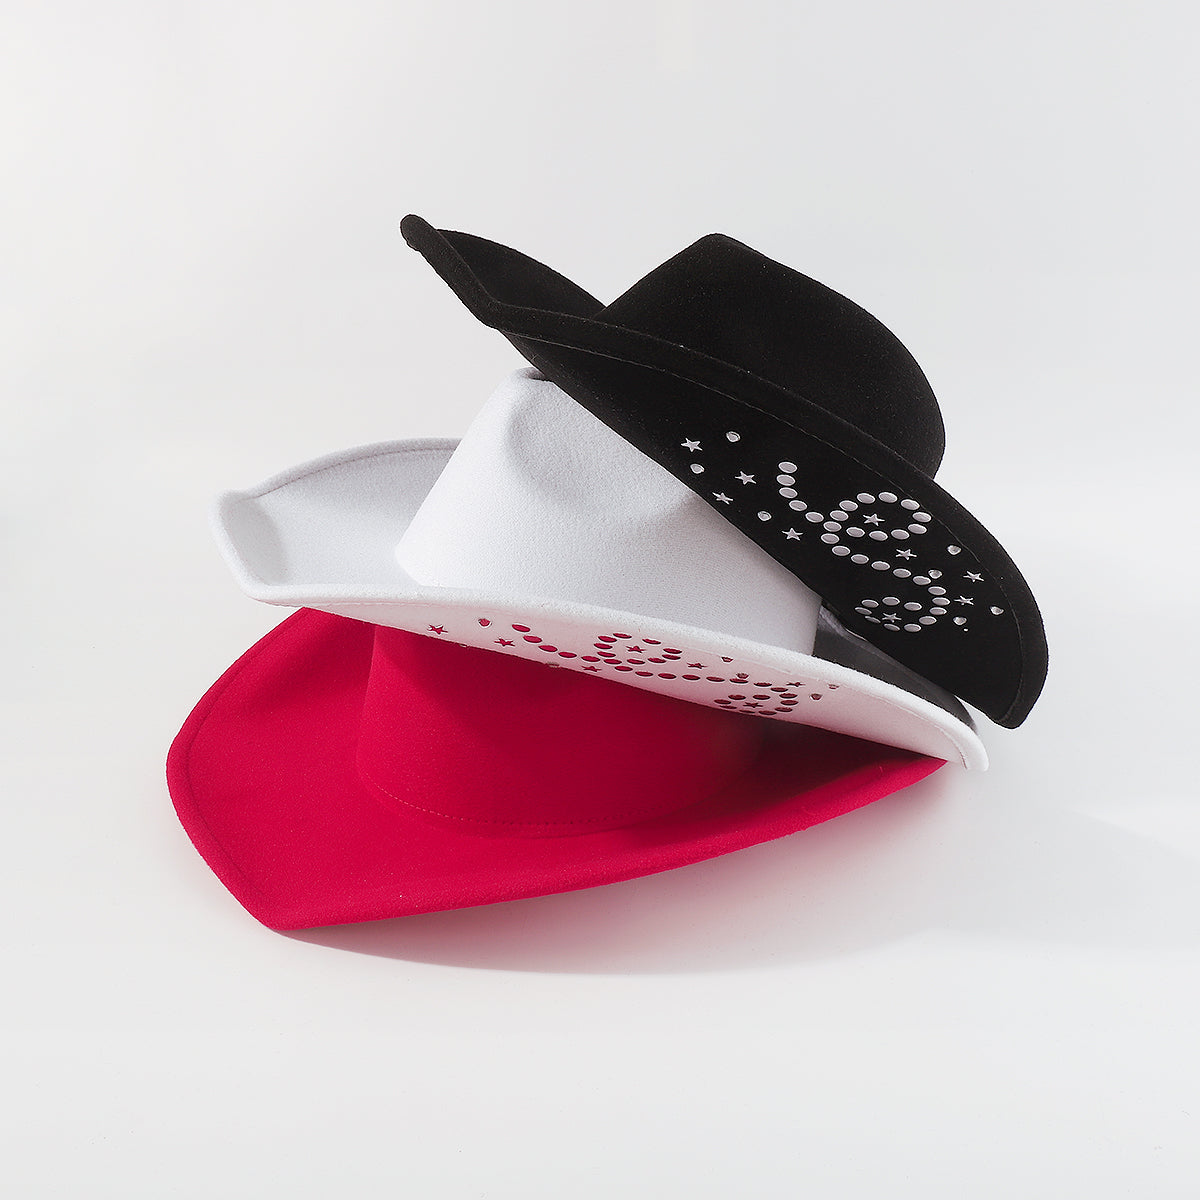 Q0285 Star Felt Cowboy Hat